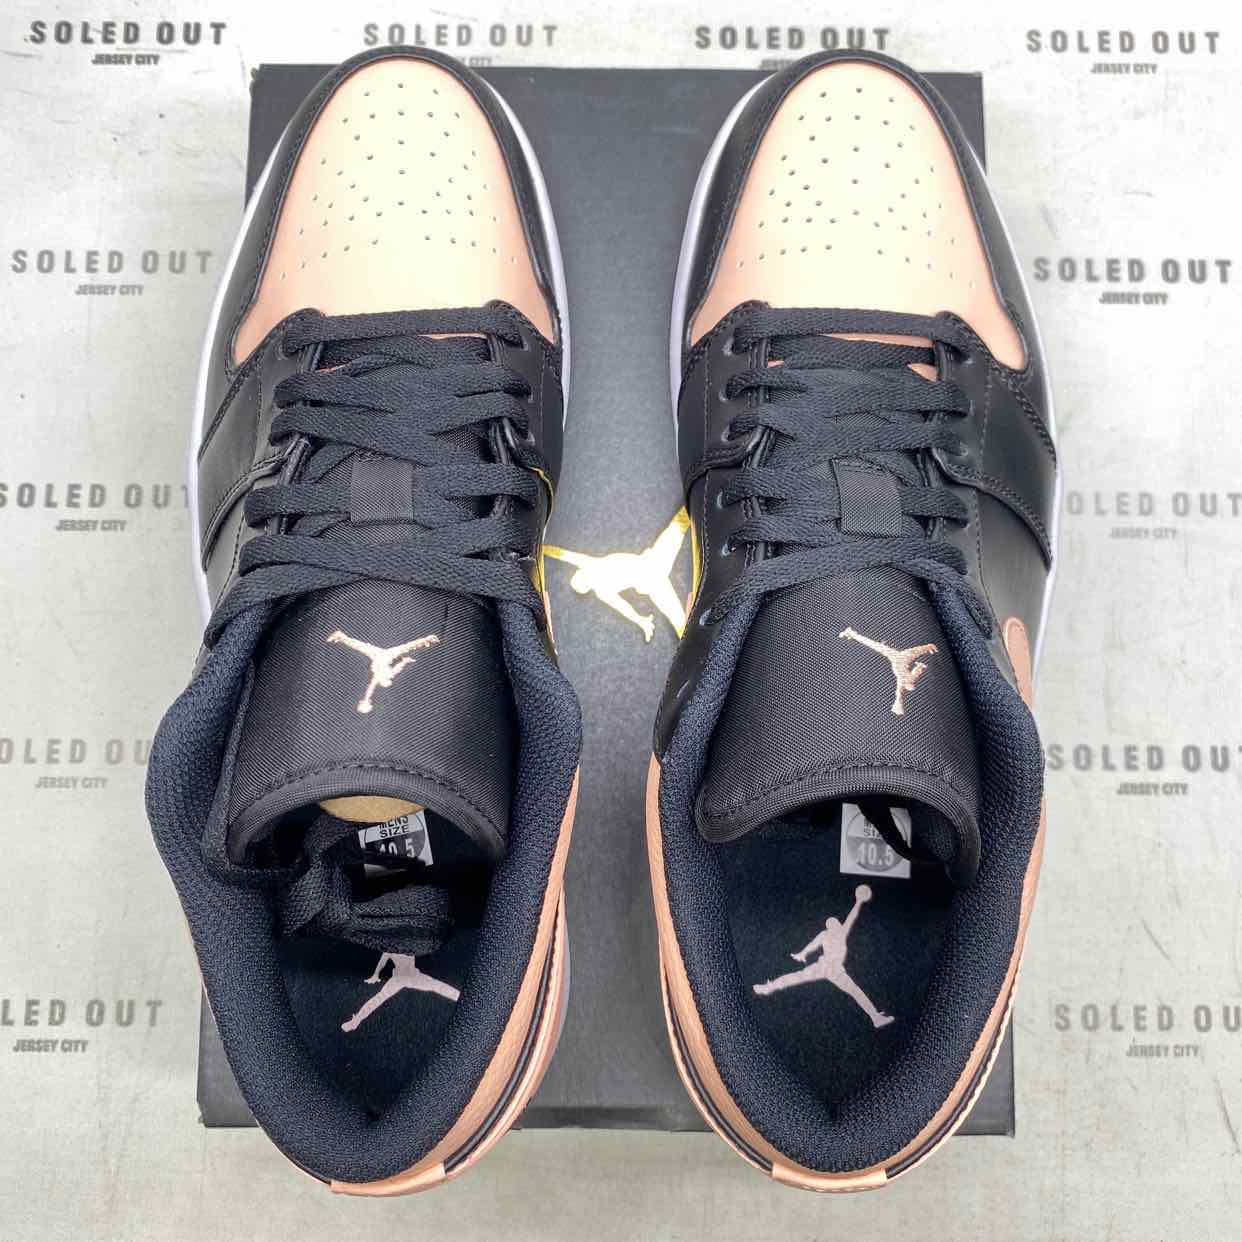 Air Jordan 1 Low "CRIMSON TINT" 2021 New Original Box Size 10.5